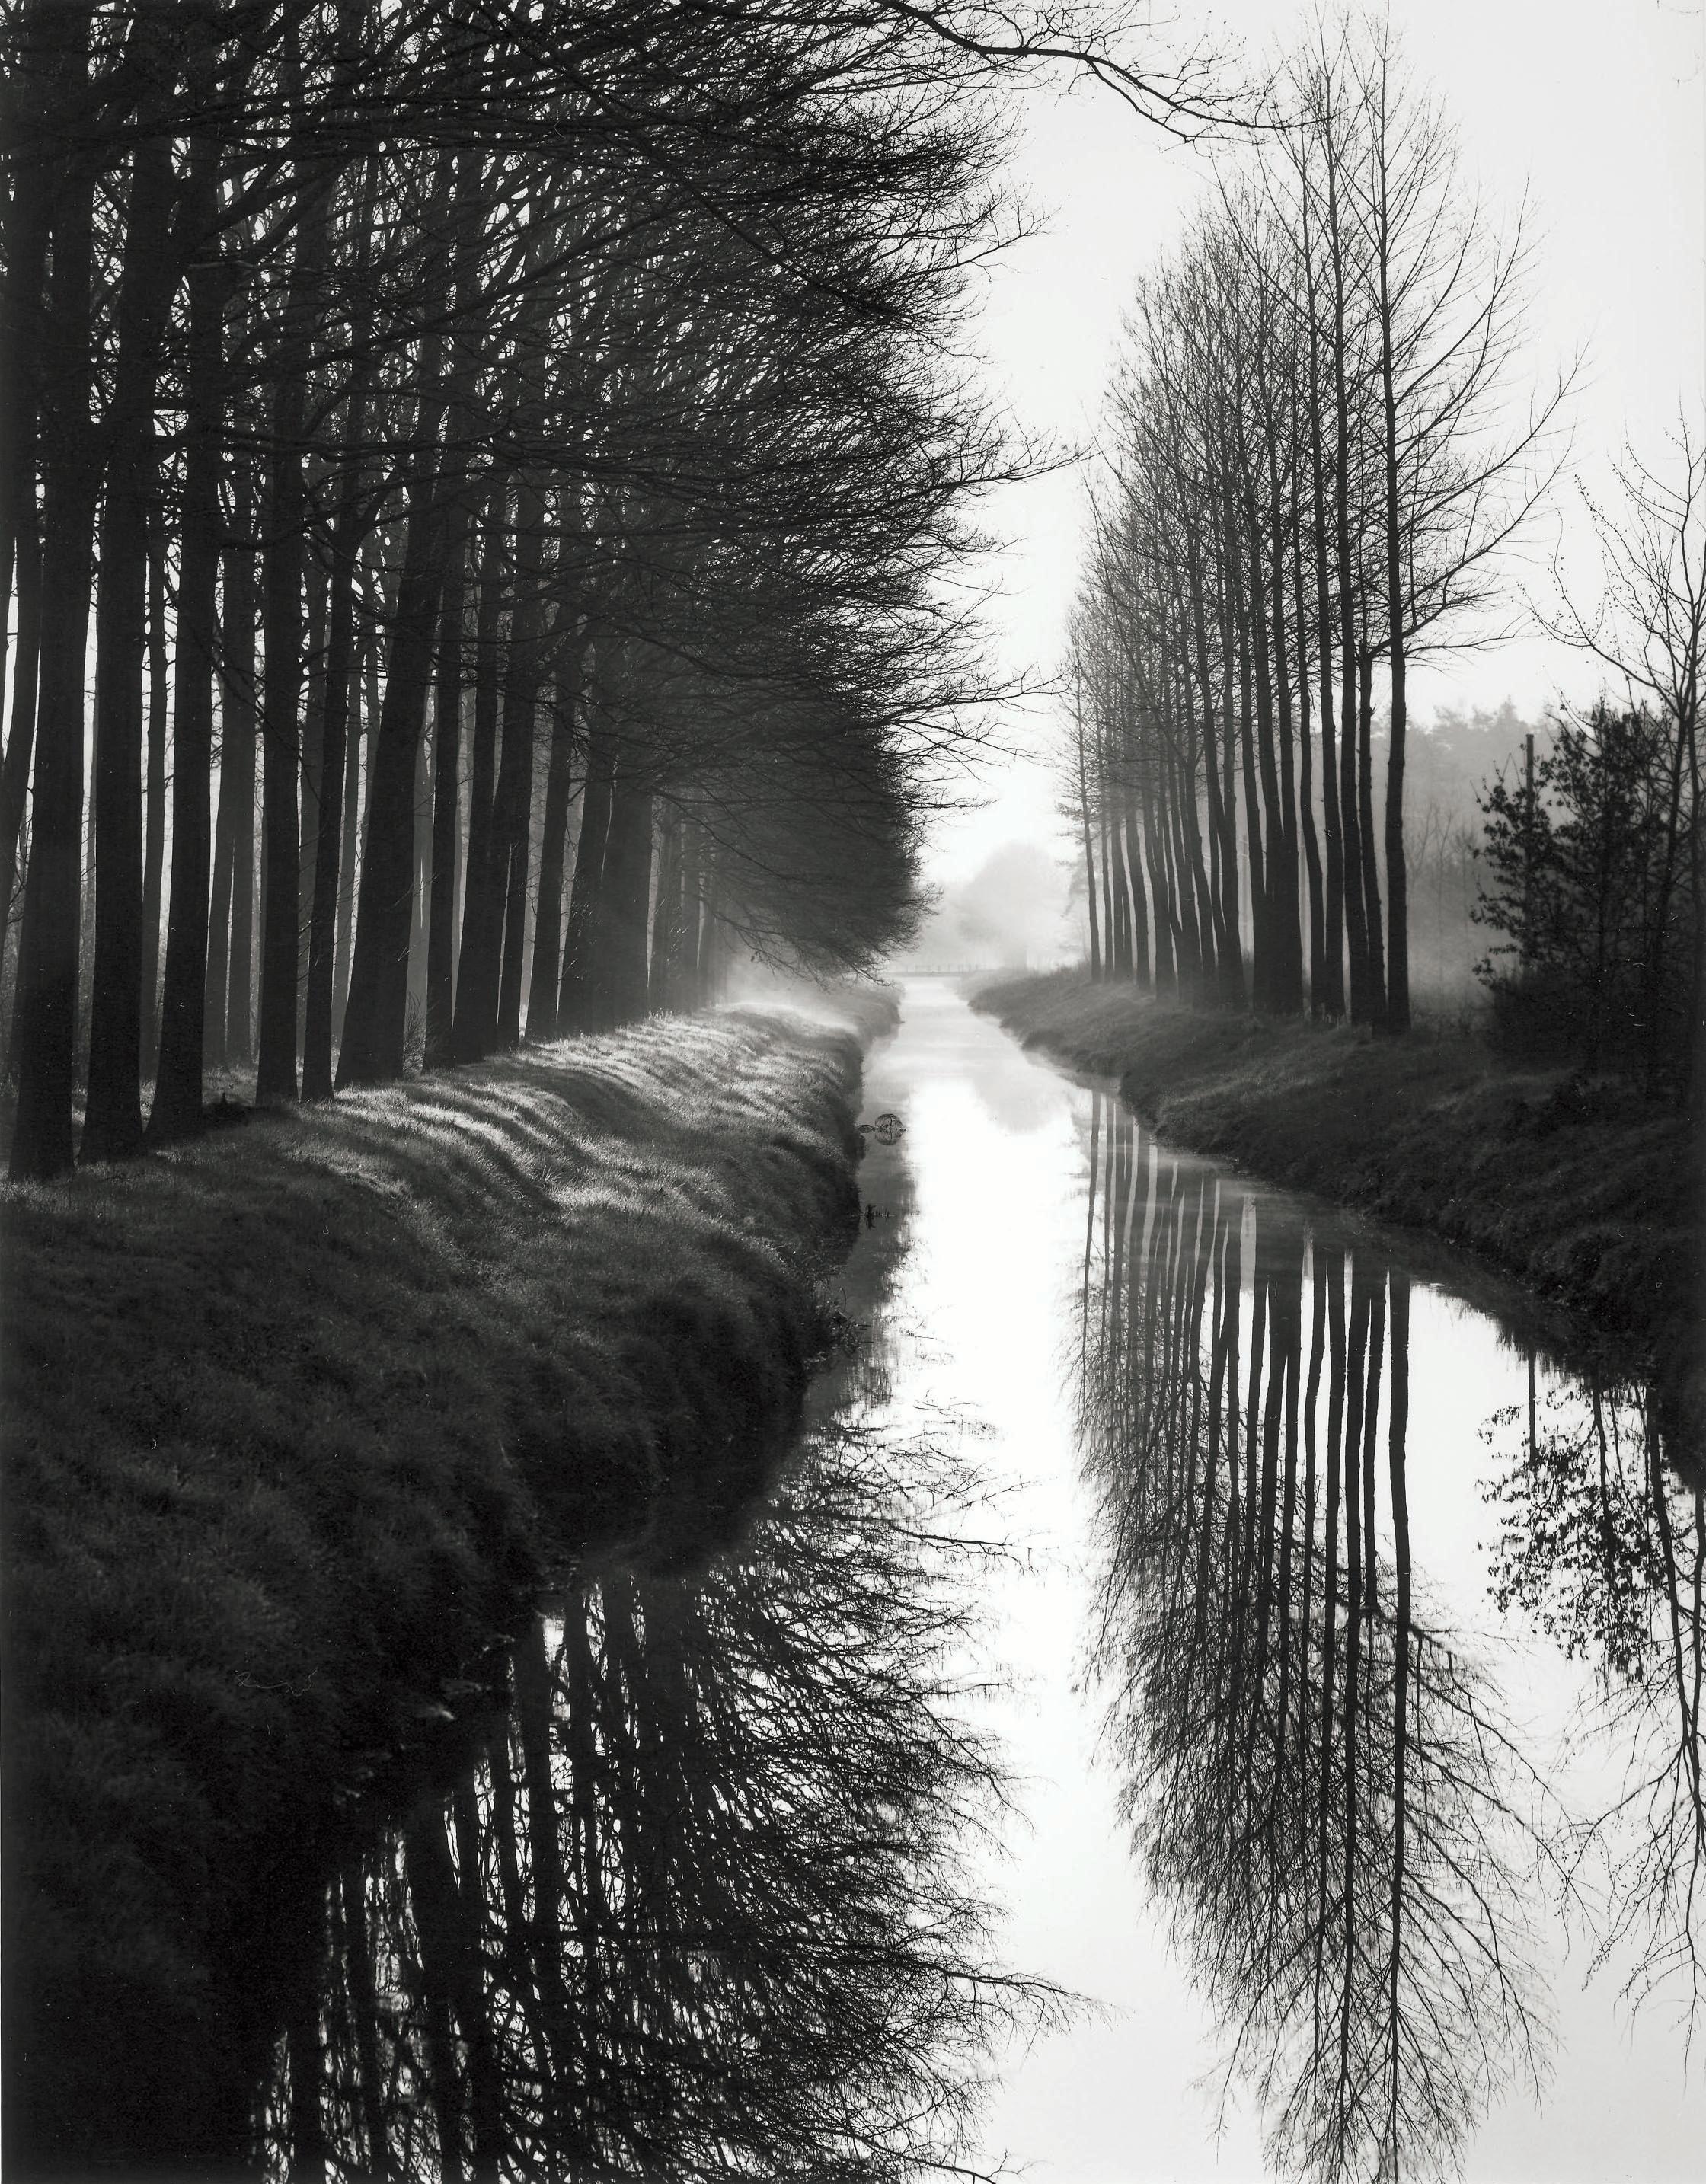 What did Brett Weston photograph?